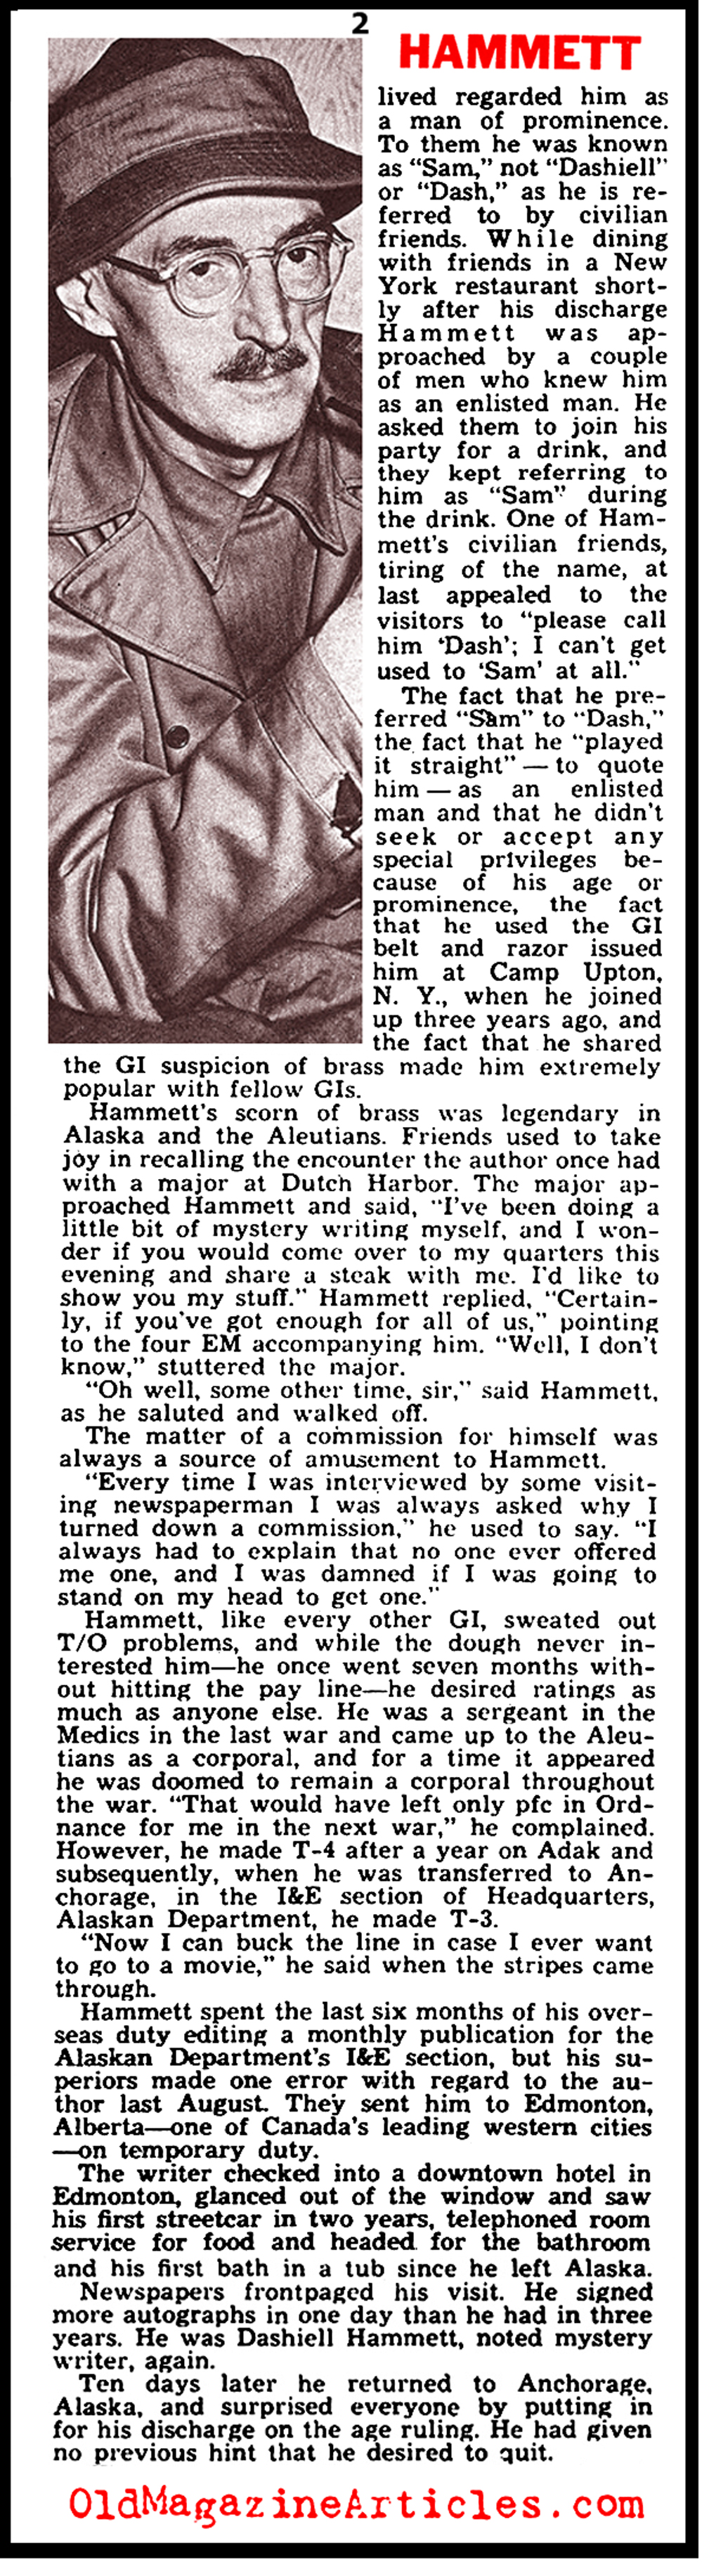 Dashiel Hammett Fights the Fascists (Yank Magazine, 1945)